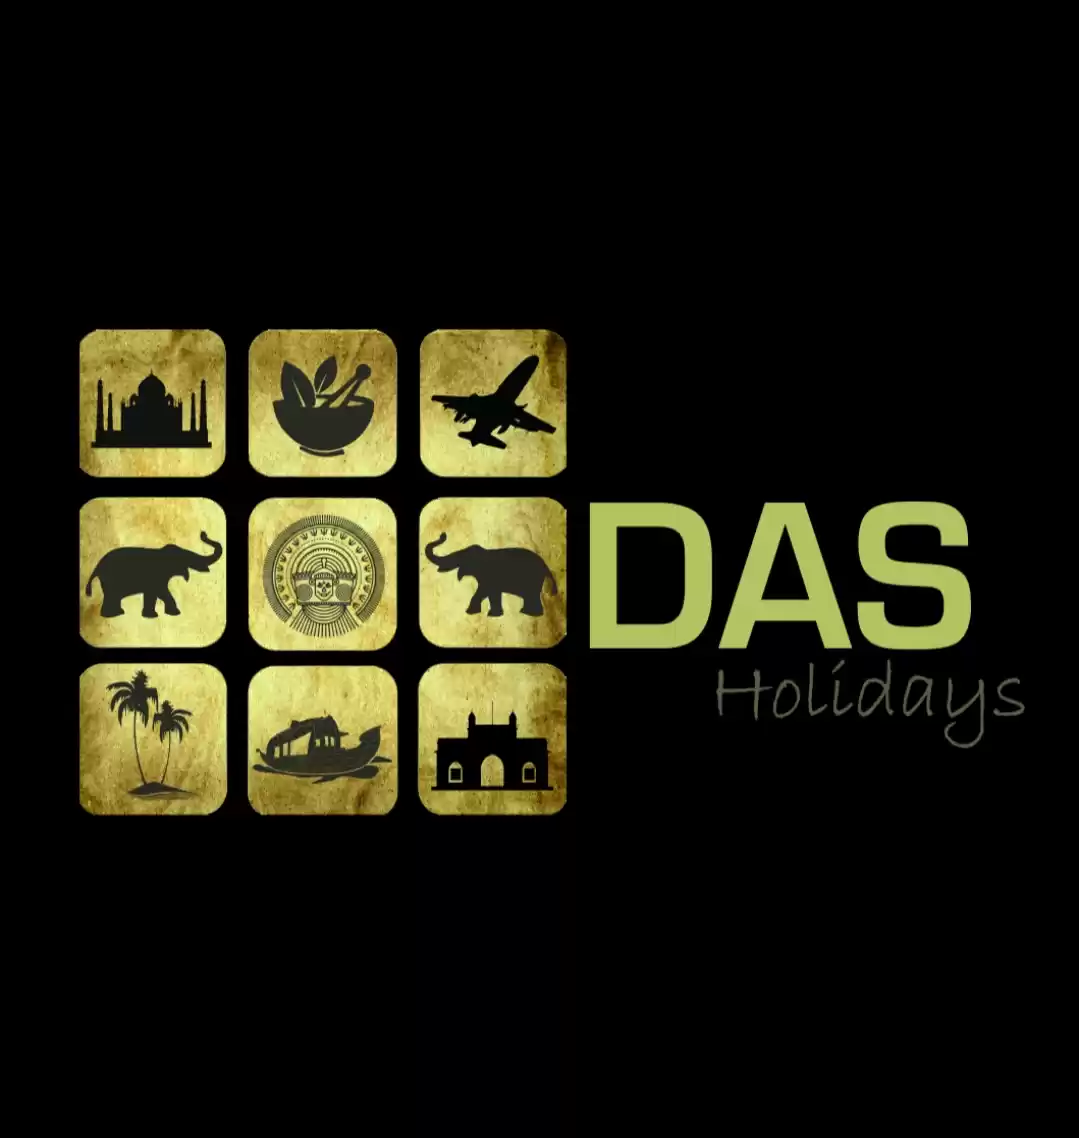 Photo of Das Holidays